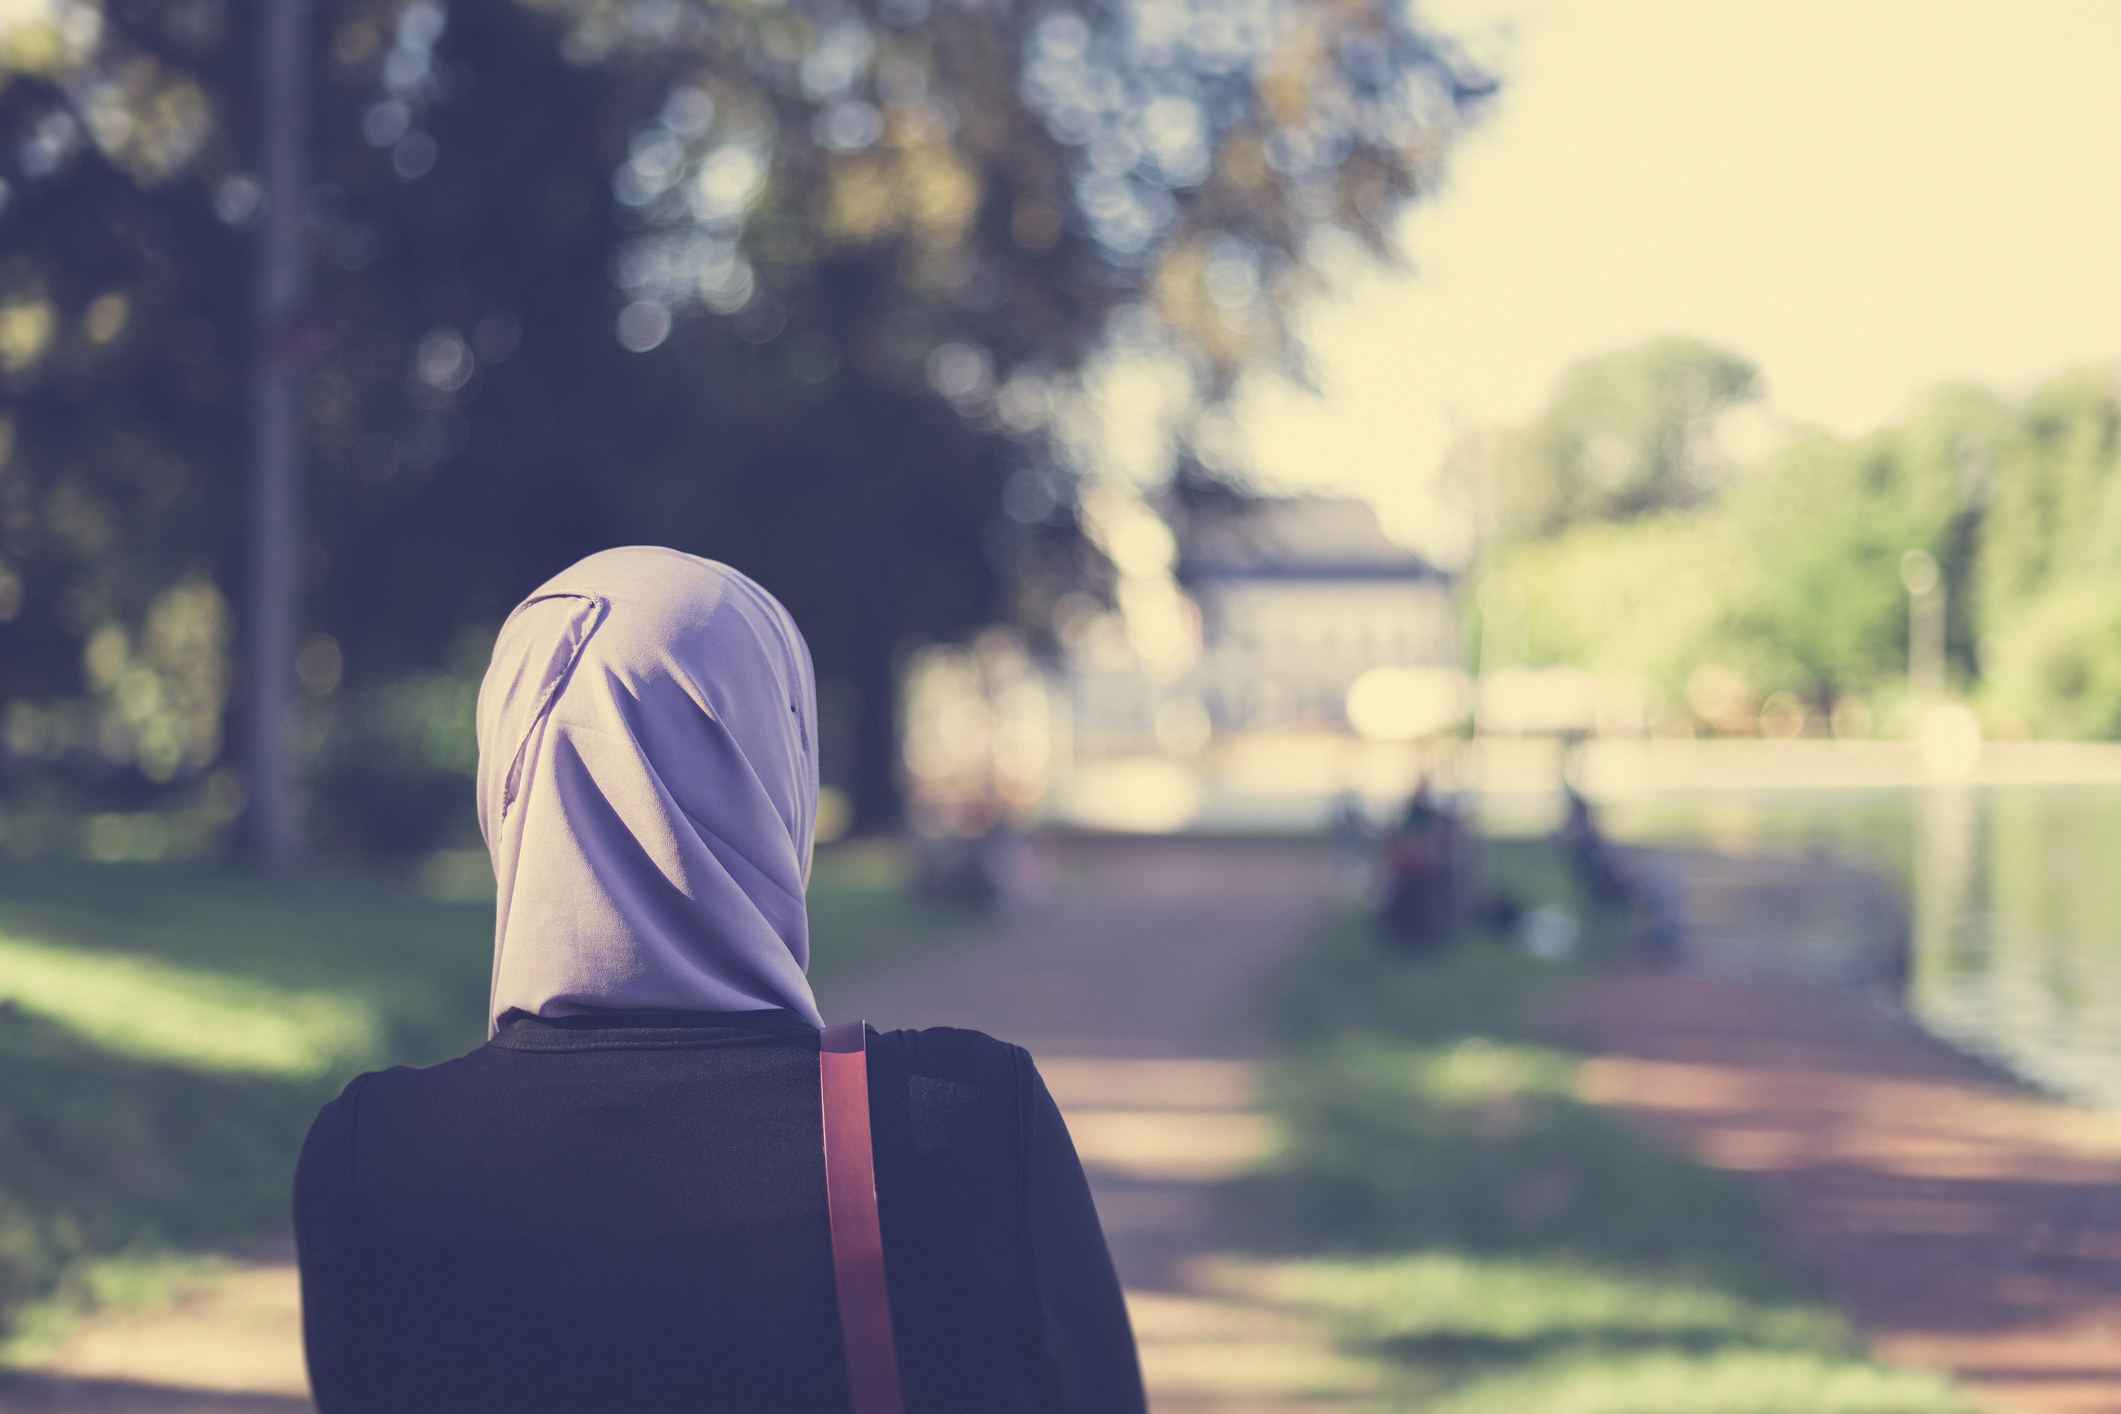 A Muslim woman walking down a path